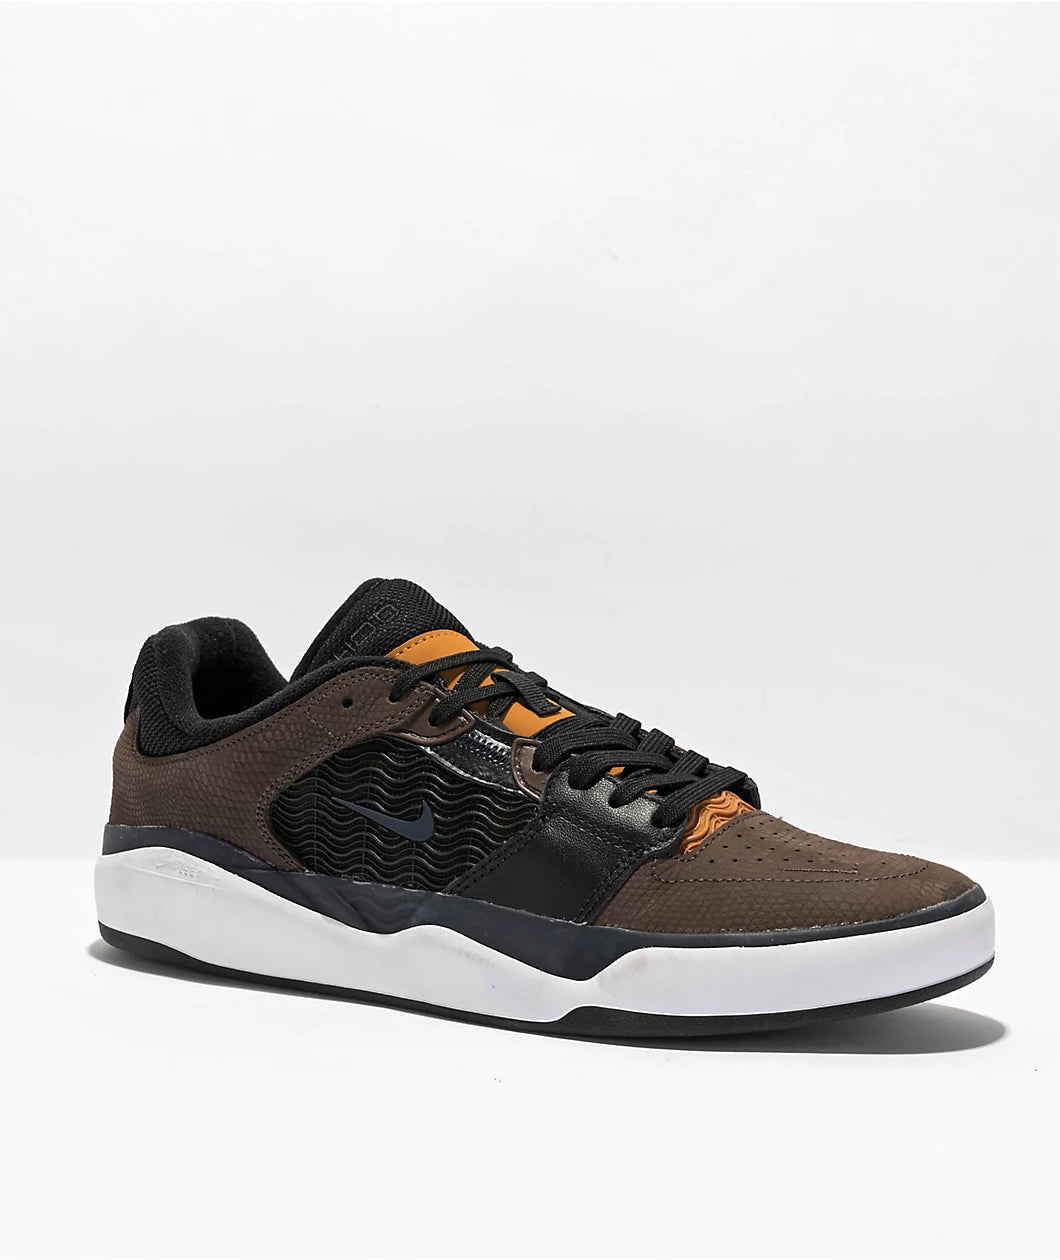 Nike SB Ishod PRM - Baroque Brown & Black Skate Shoes - Sun Diego Boardshop